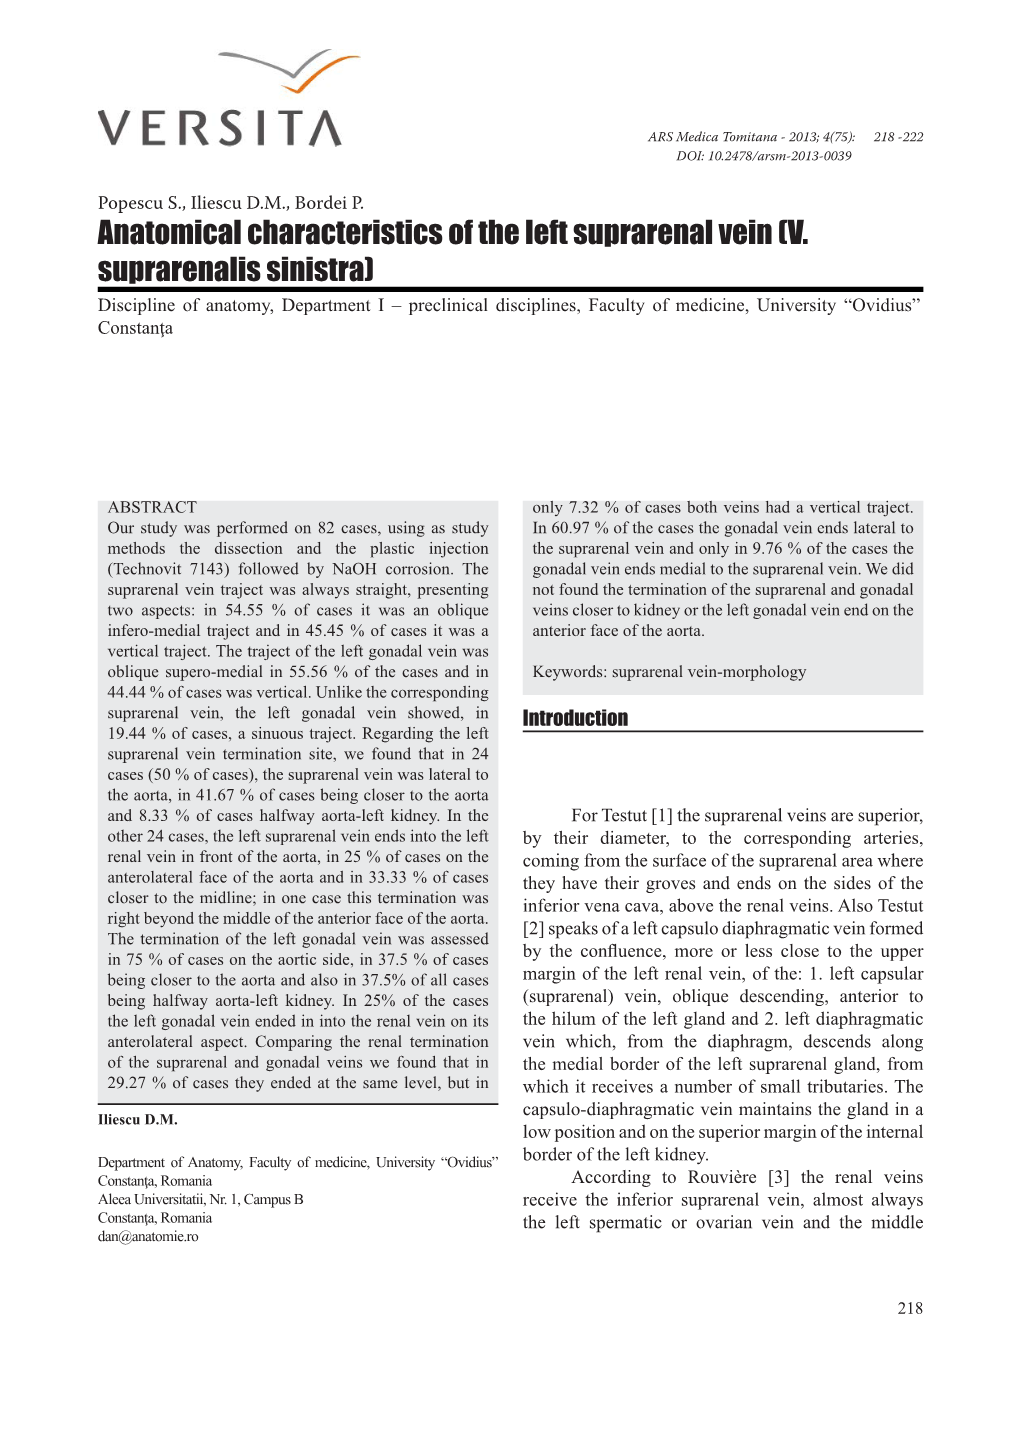 Anatomical Characteristics of the Left Suprarenal Vein (V